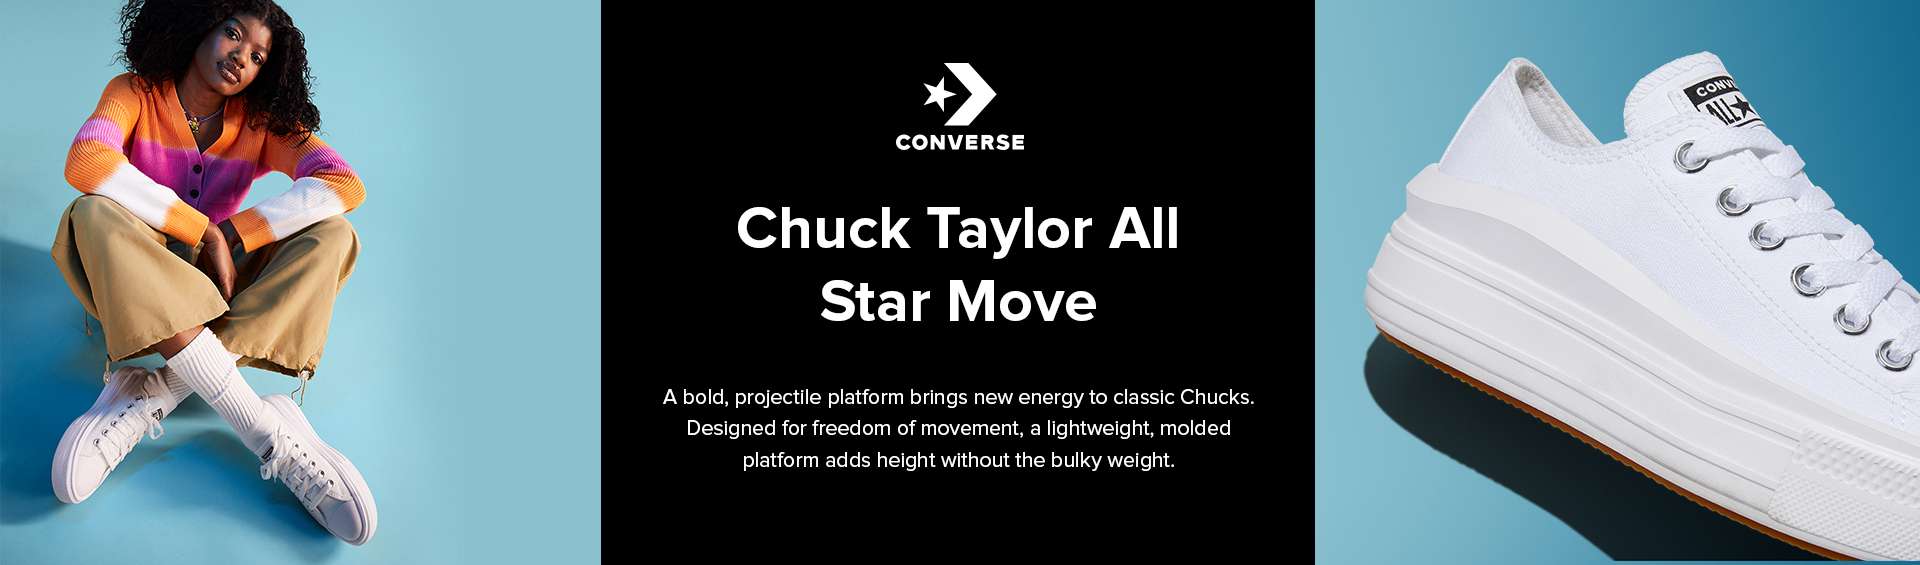 CHUCK TAYLOR ALL STAR MOVE